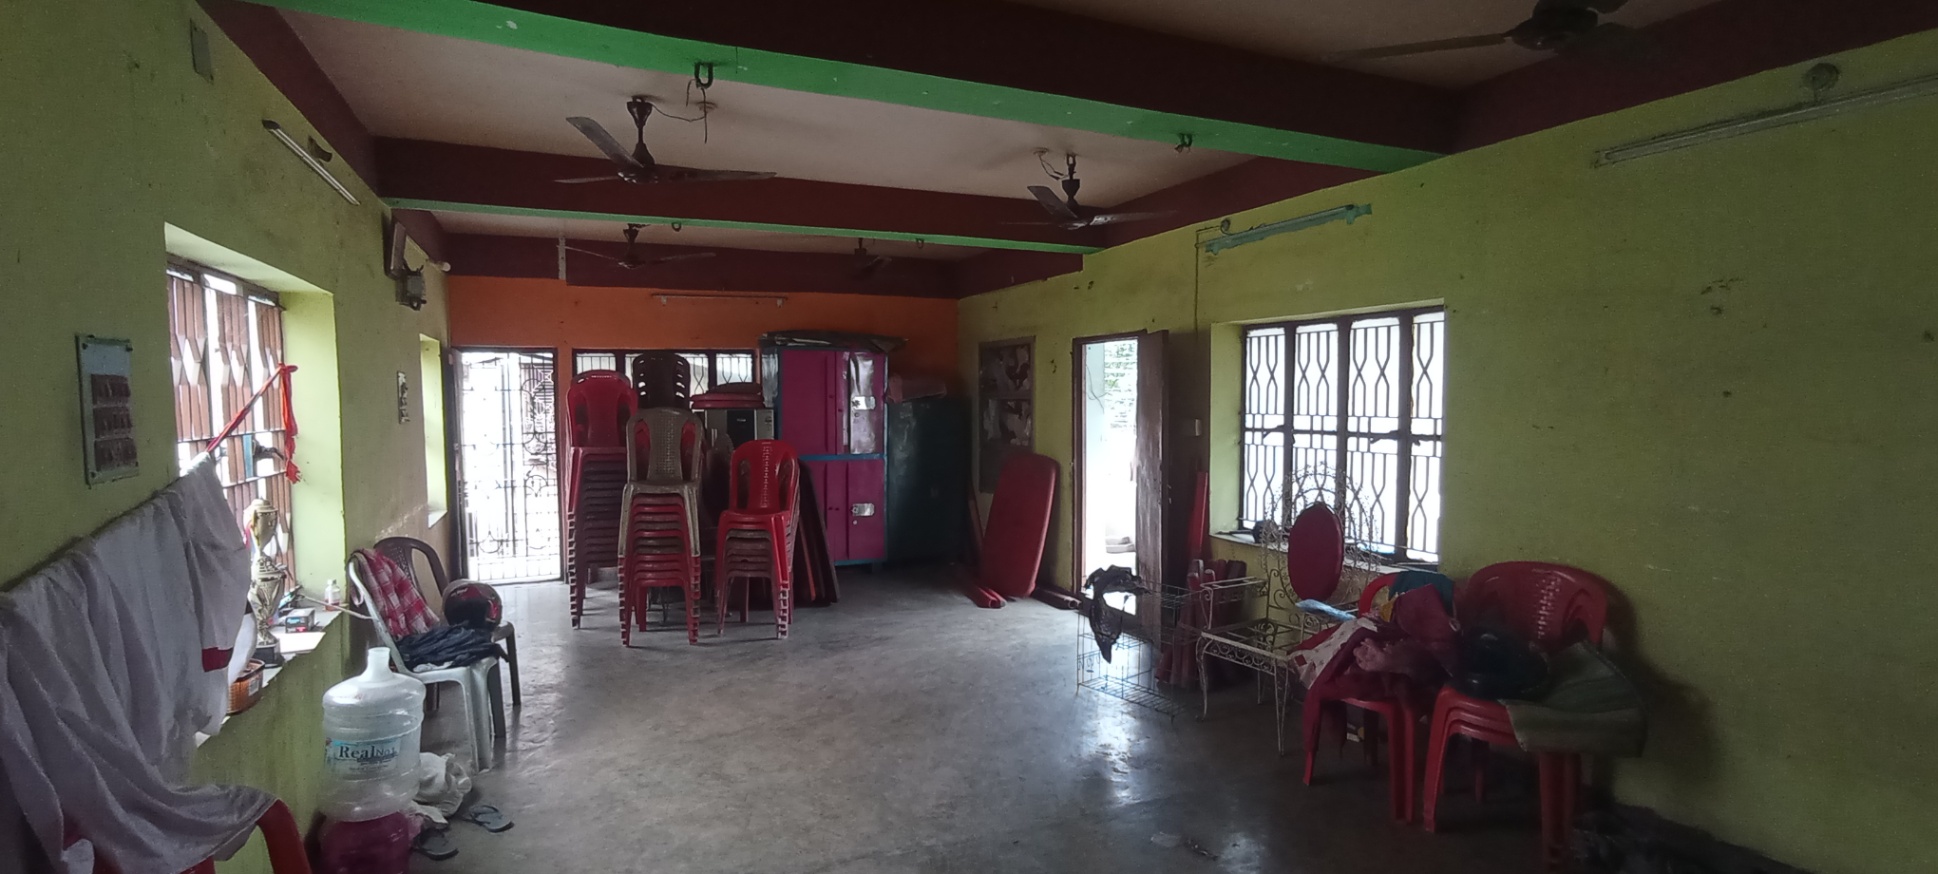 Rent Office/ Shop, 500 sq ft carpet area, Furnished for rent @Kamalgazi more , Rajpur Sonarpur road